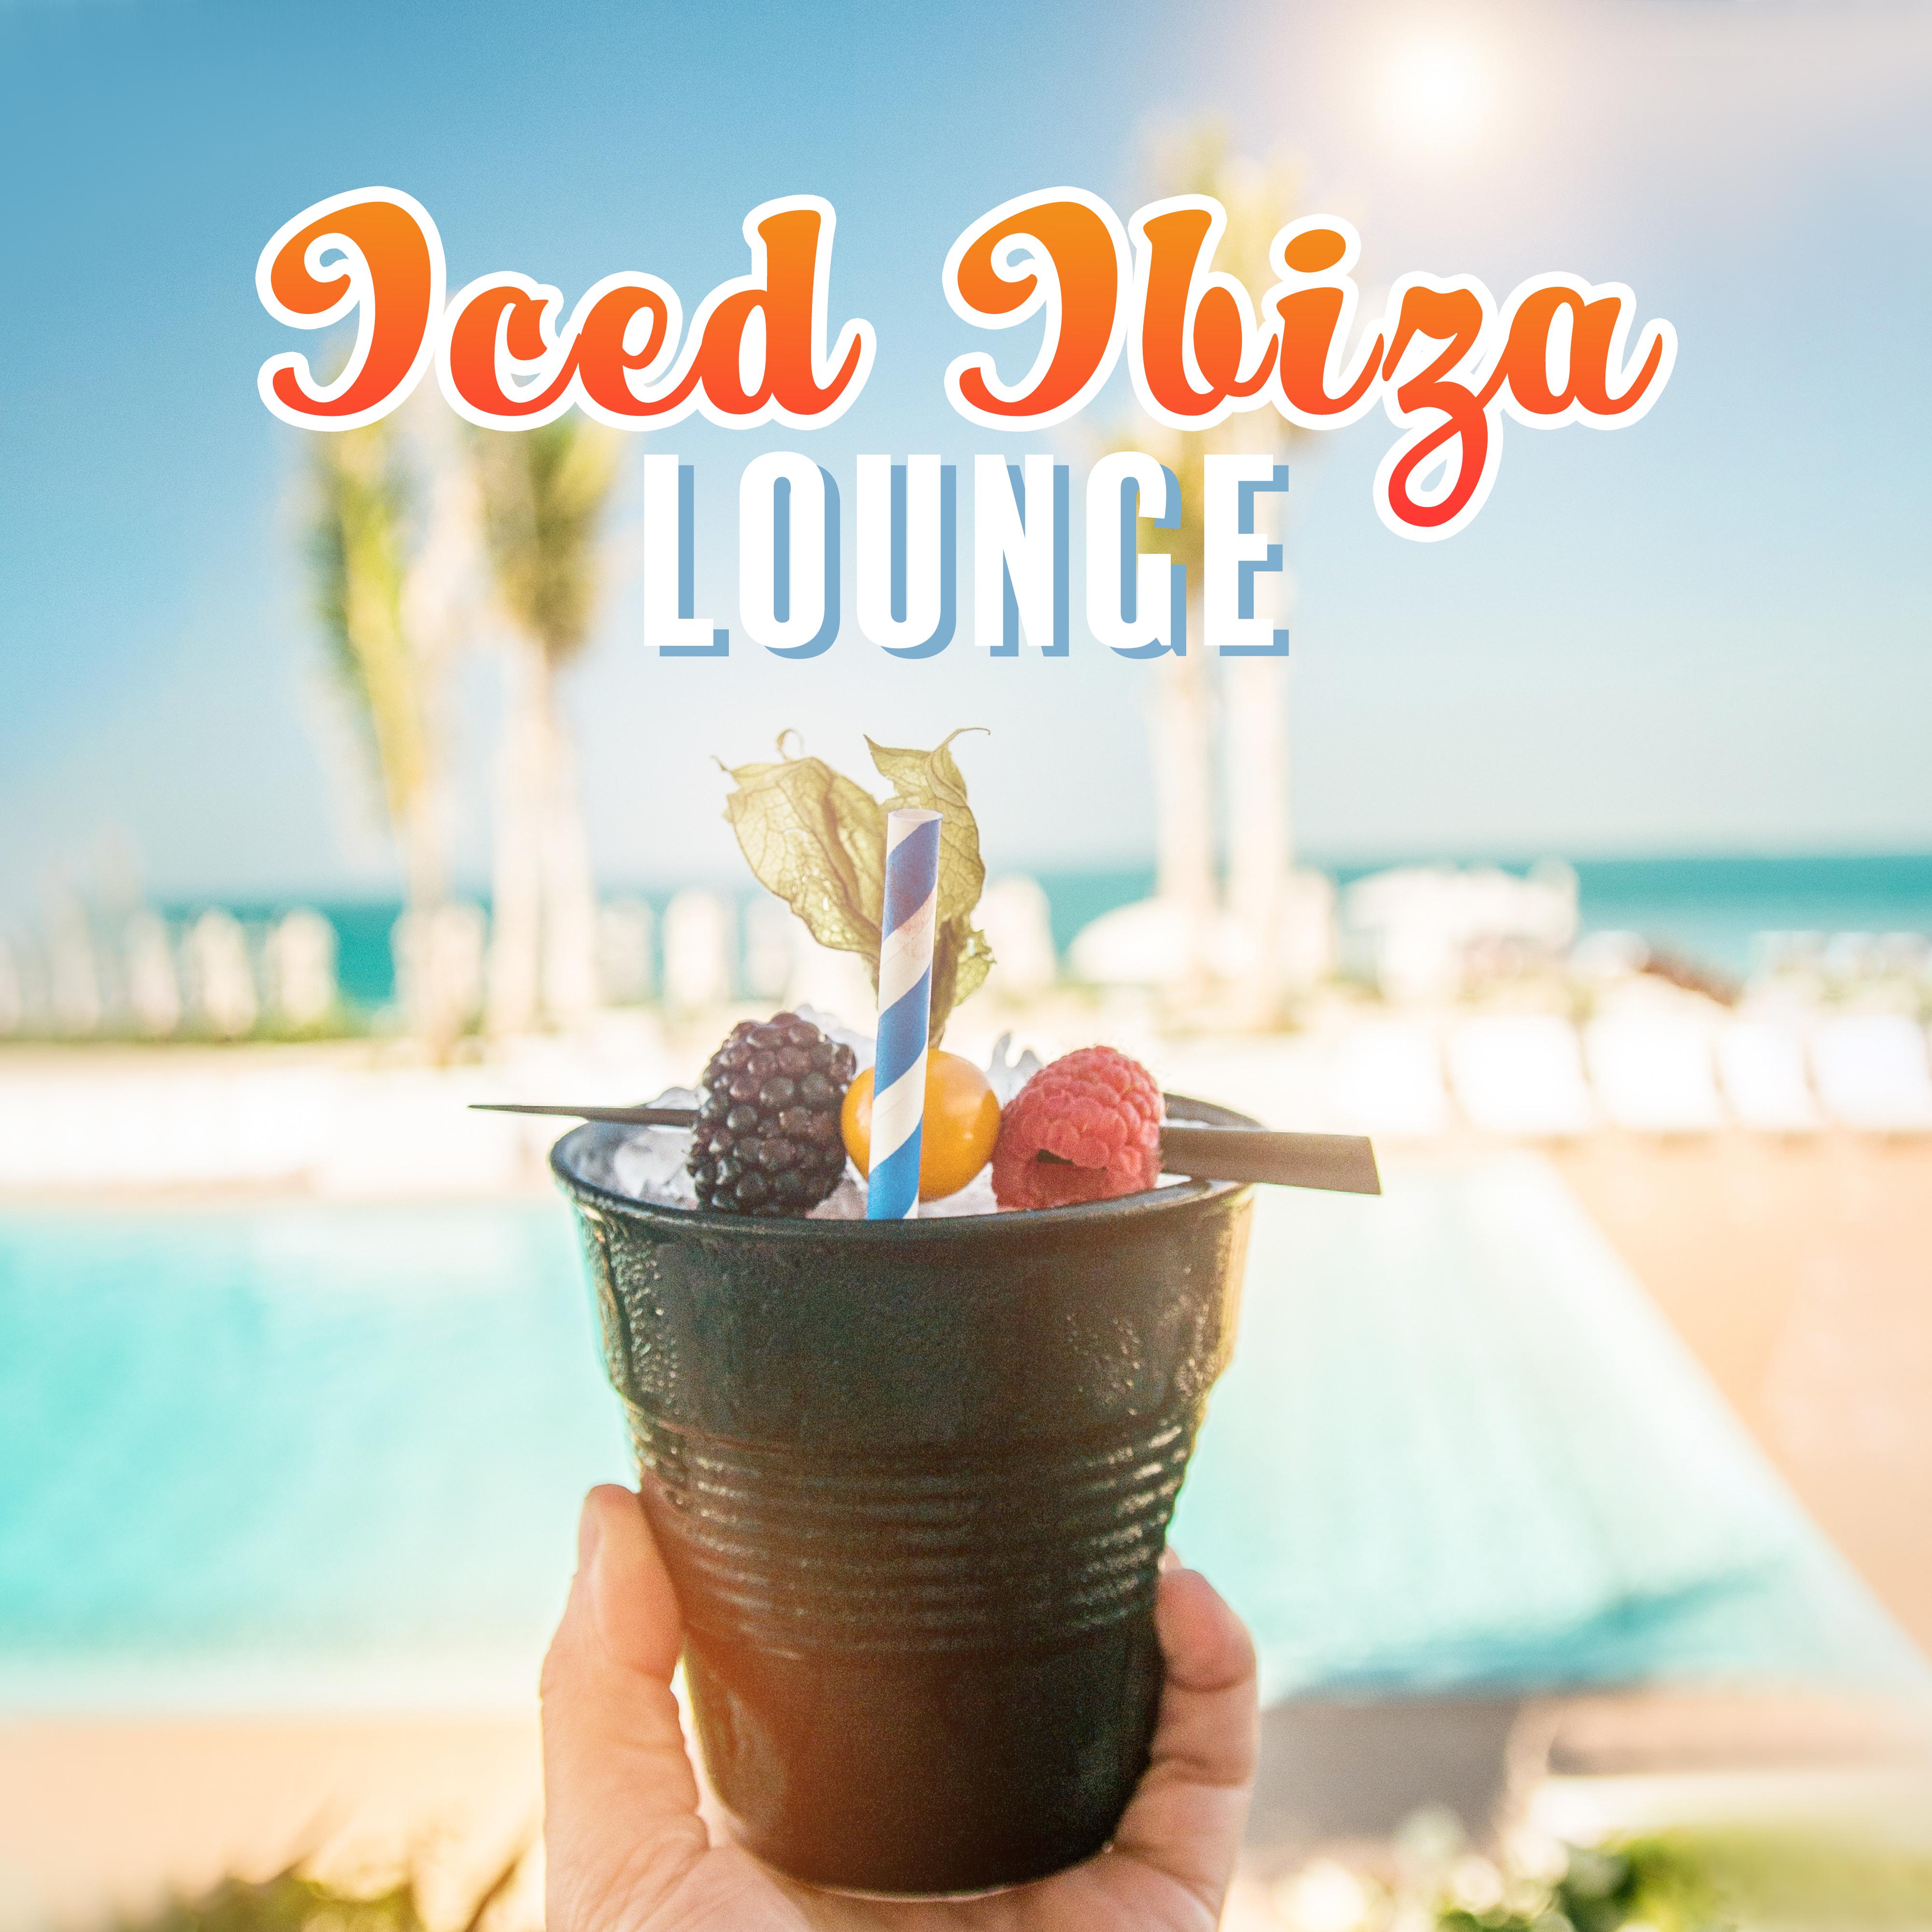 Iced Ibiza Lounge – Summer Hits 2019, Holiday Music, Full Relax, Chilled Ibiza Vibrations